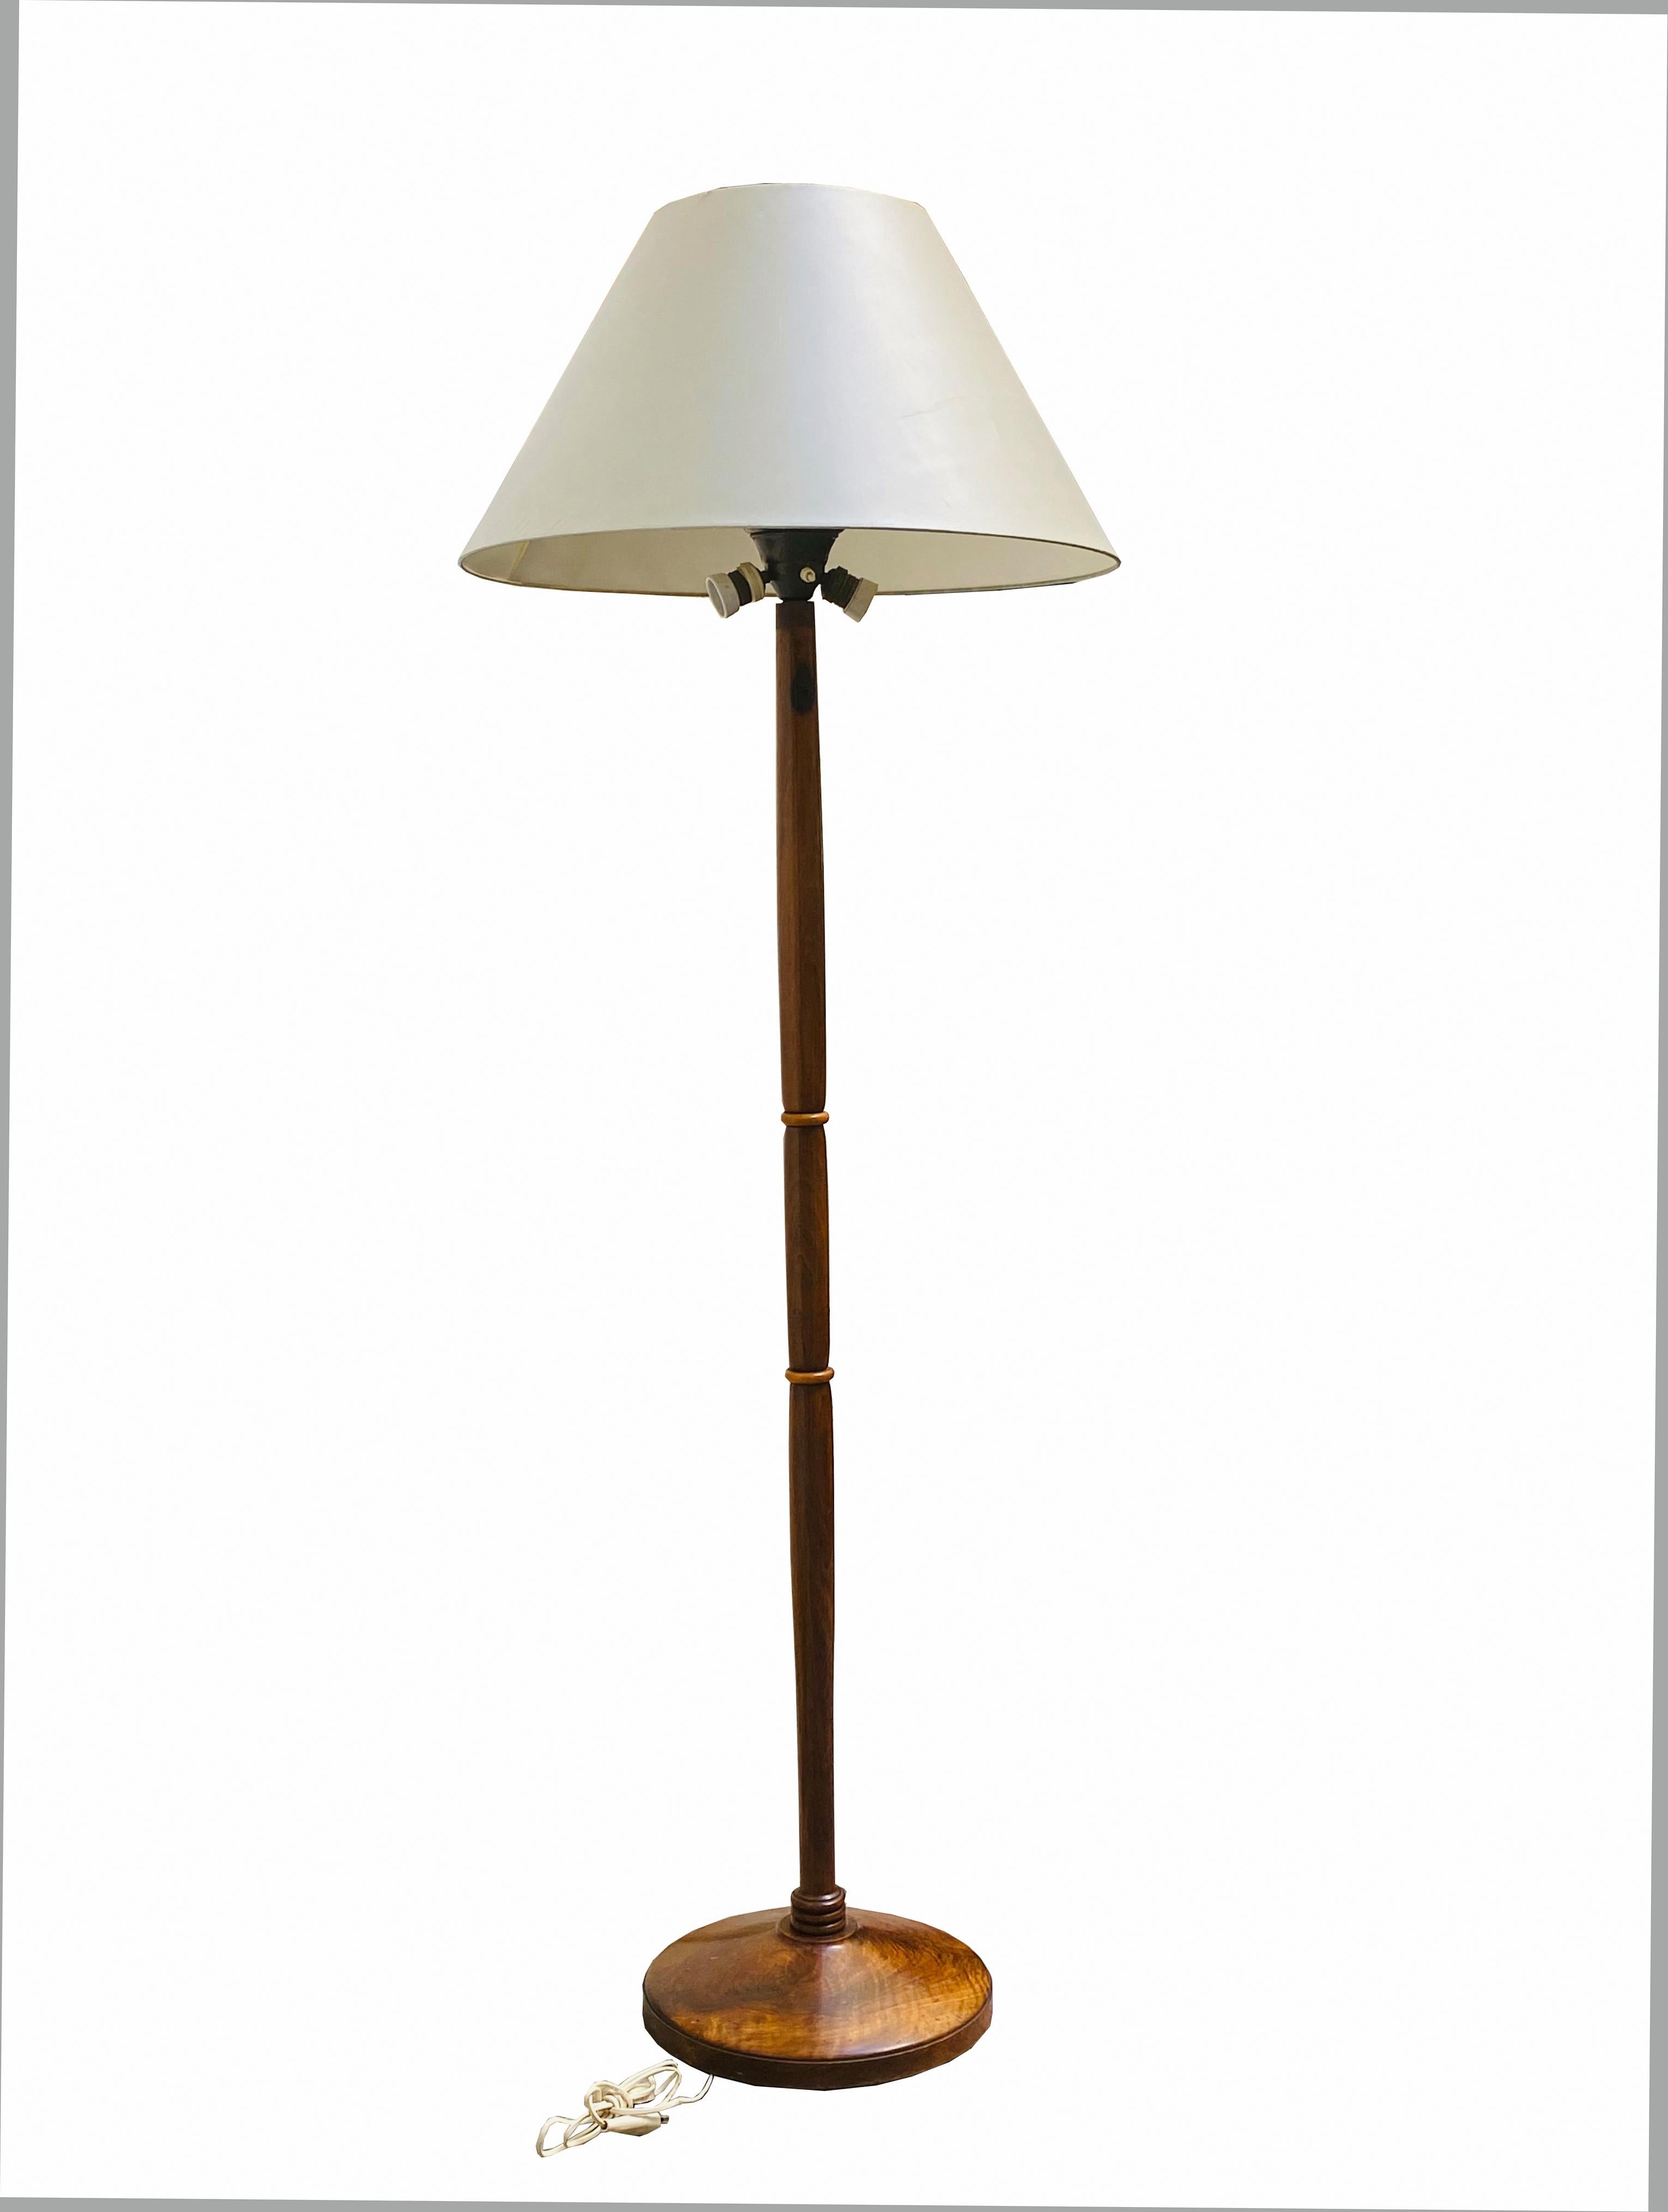 Beautiful floor lamp made of turned wood and satin fabric shade, Italian production 1940.